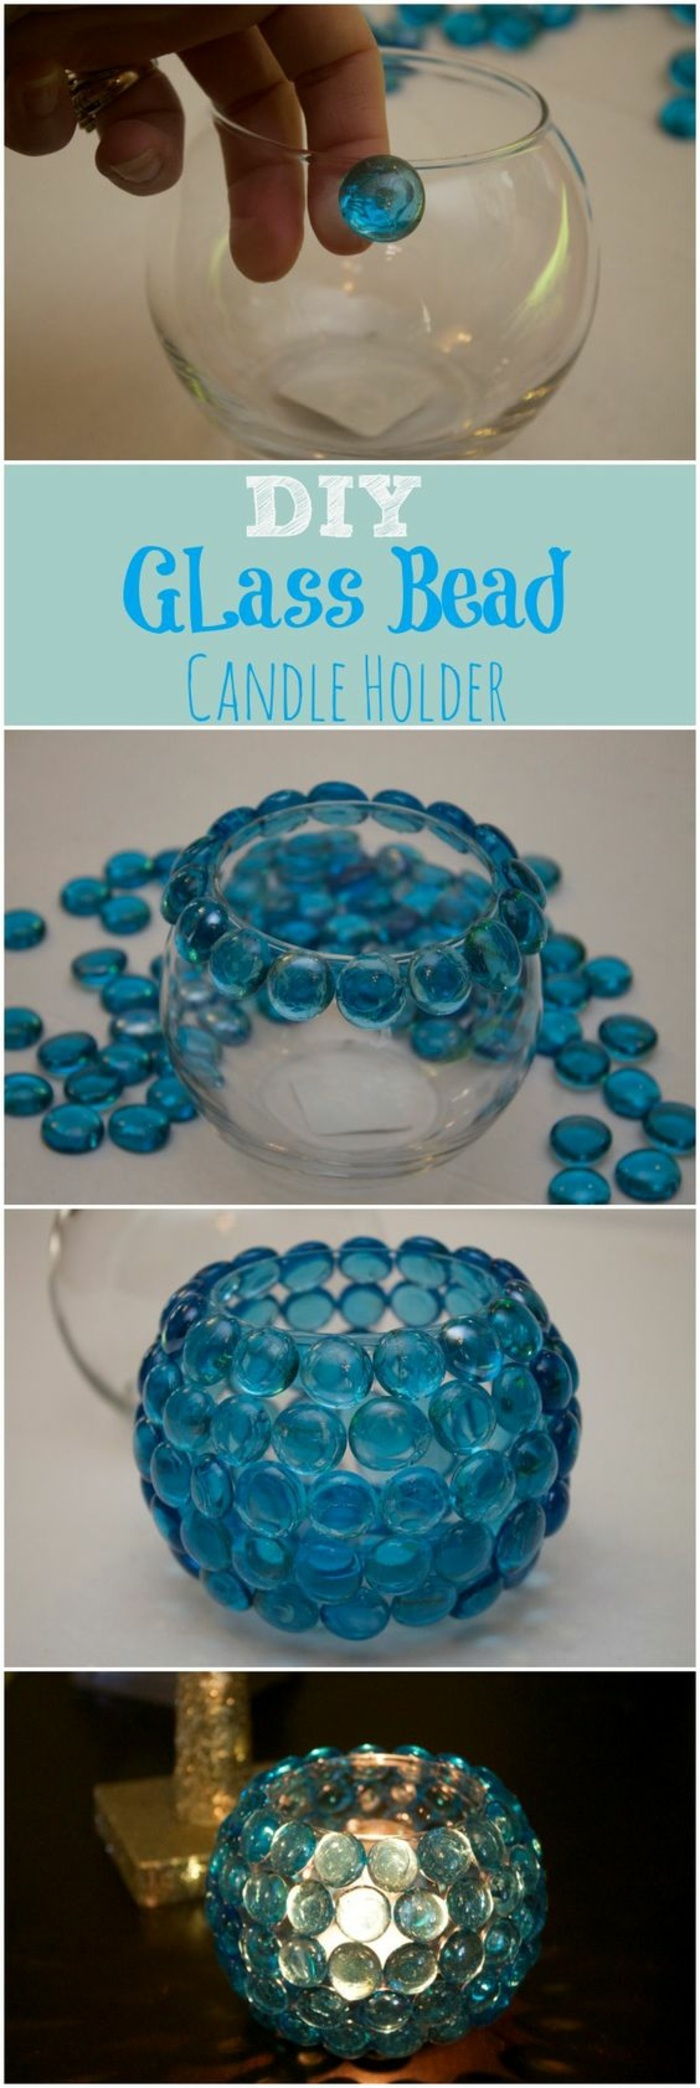 Decore redondo vaso de vidro com strass azuis